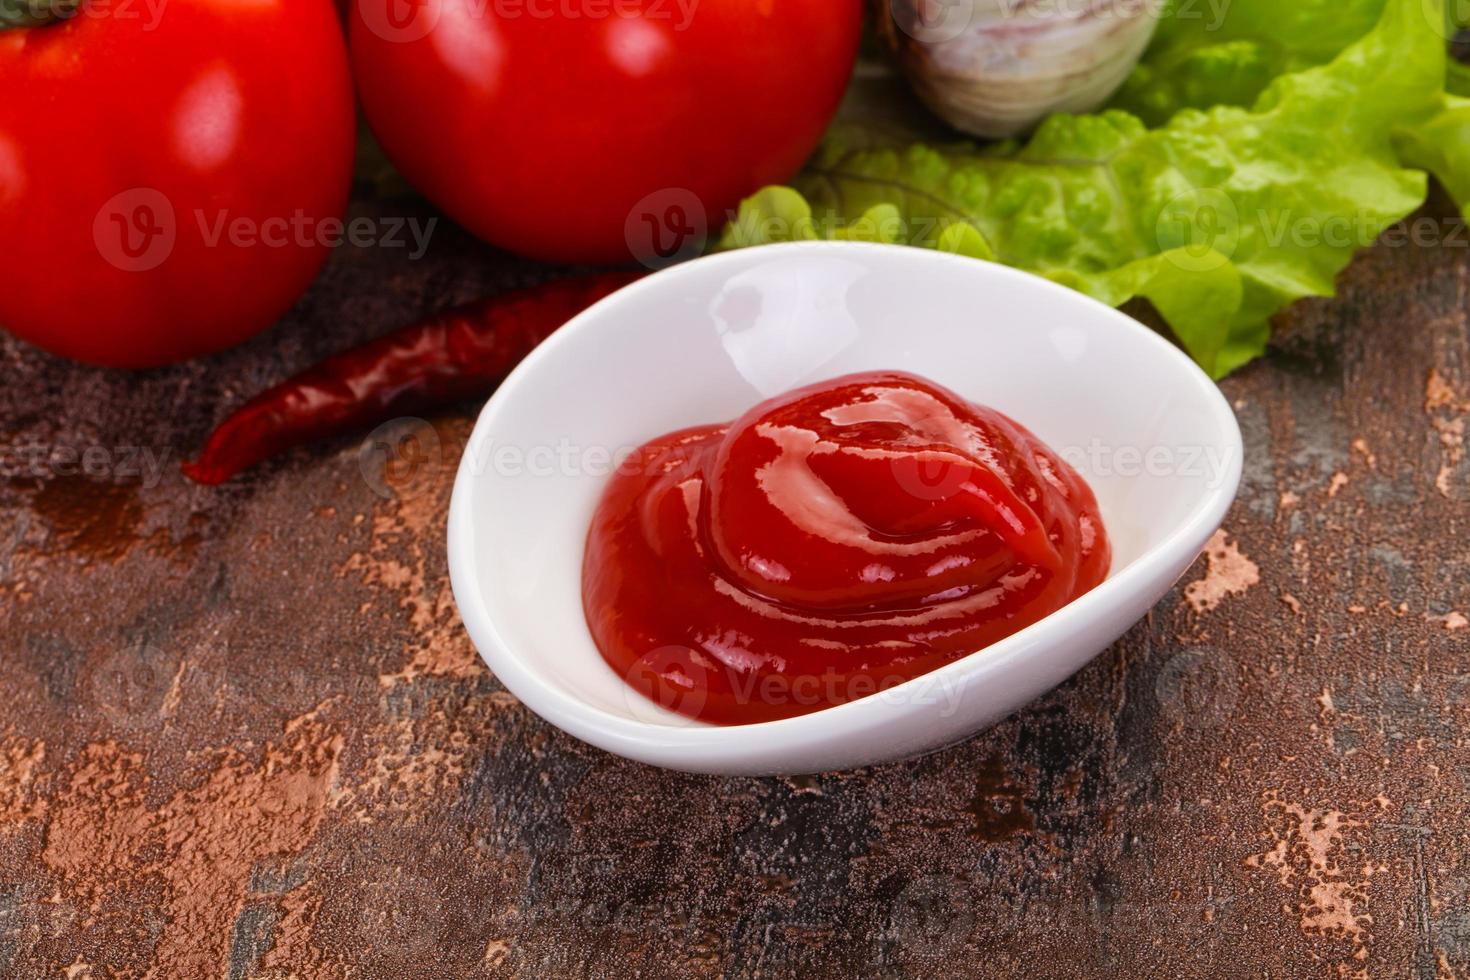 Tomaten-Ketchup-Sauce foto